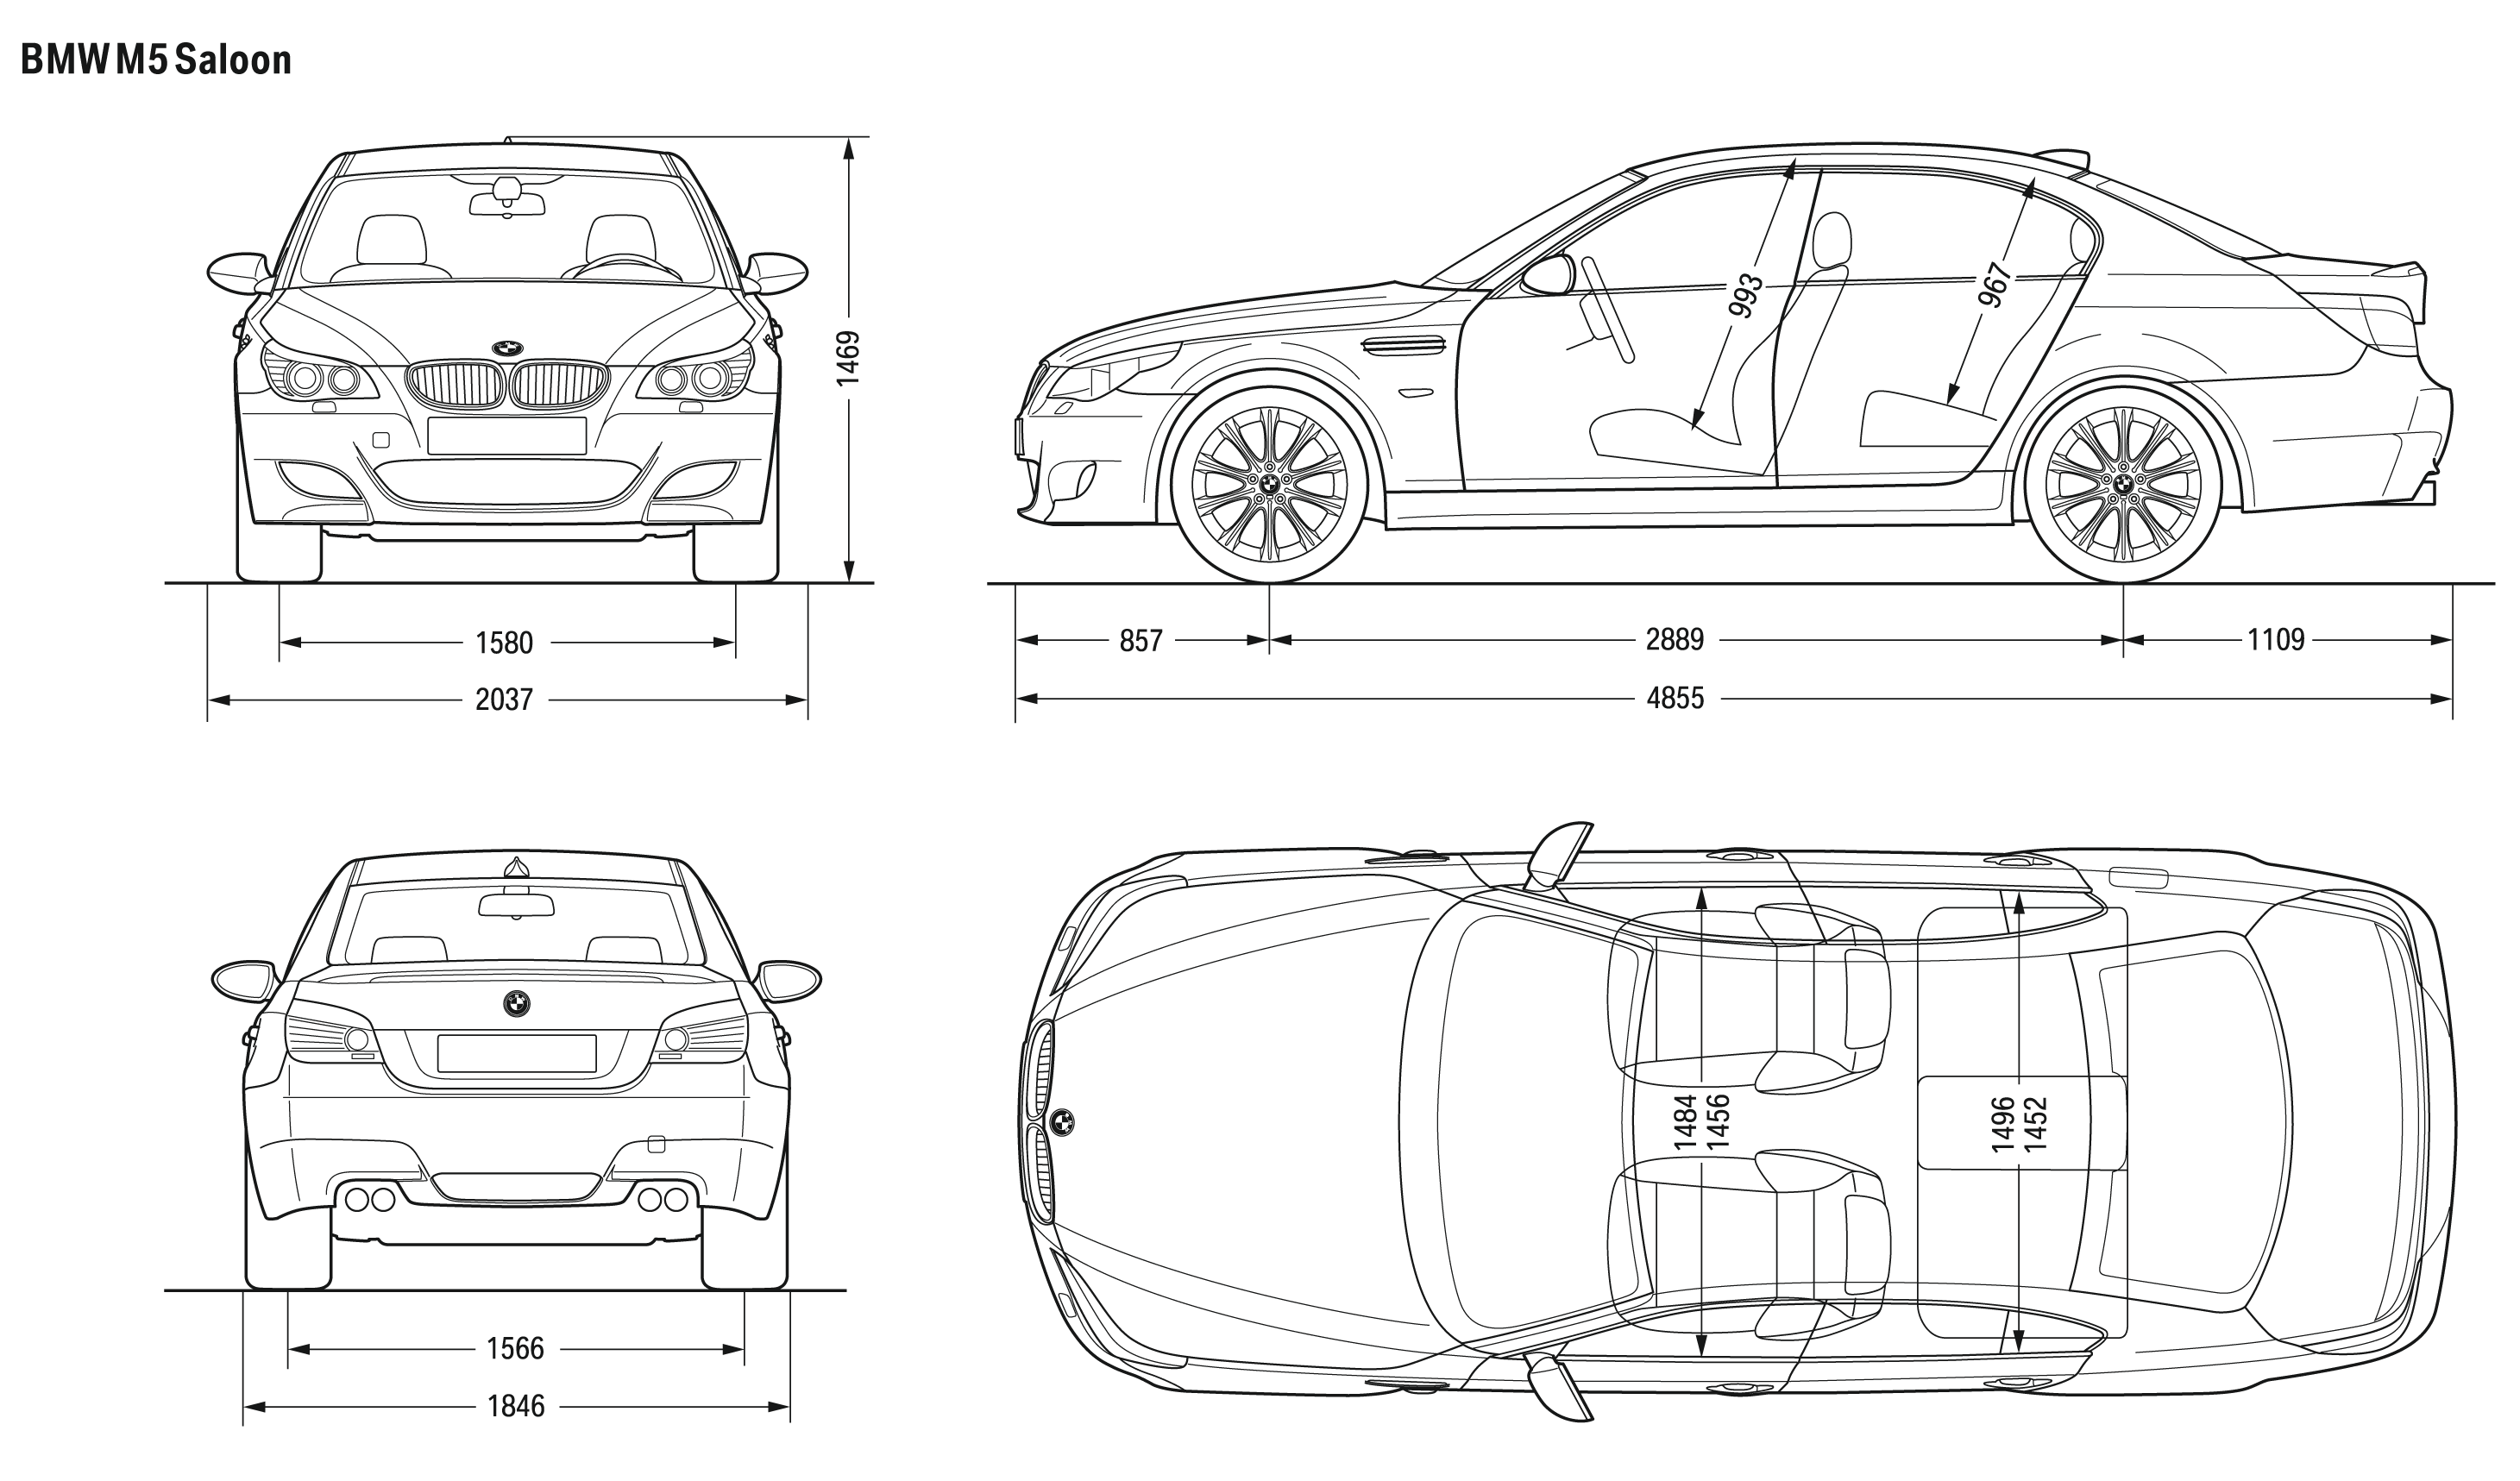 BMW M5 (E60) (2007) Blueprints Vector Drawing Touring g21 filtrado
descubierto performancedrive g20 brevetto bmwpassion contras marzen
automotivedesign carspyshooter motorbox ginevra